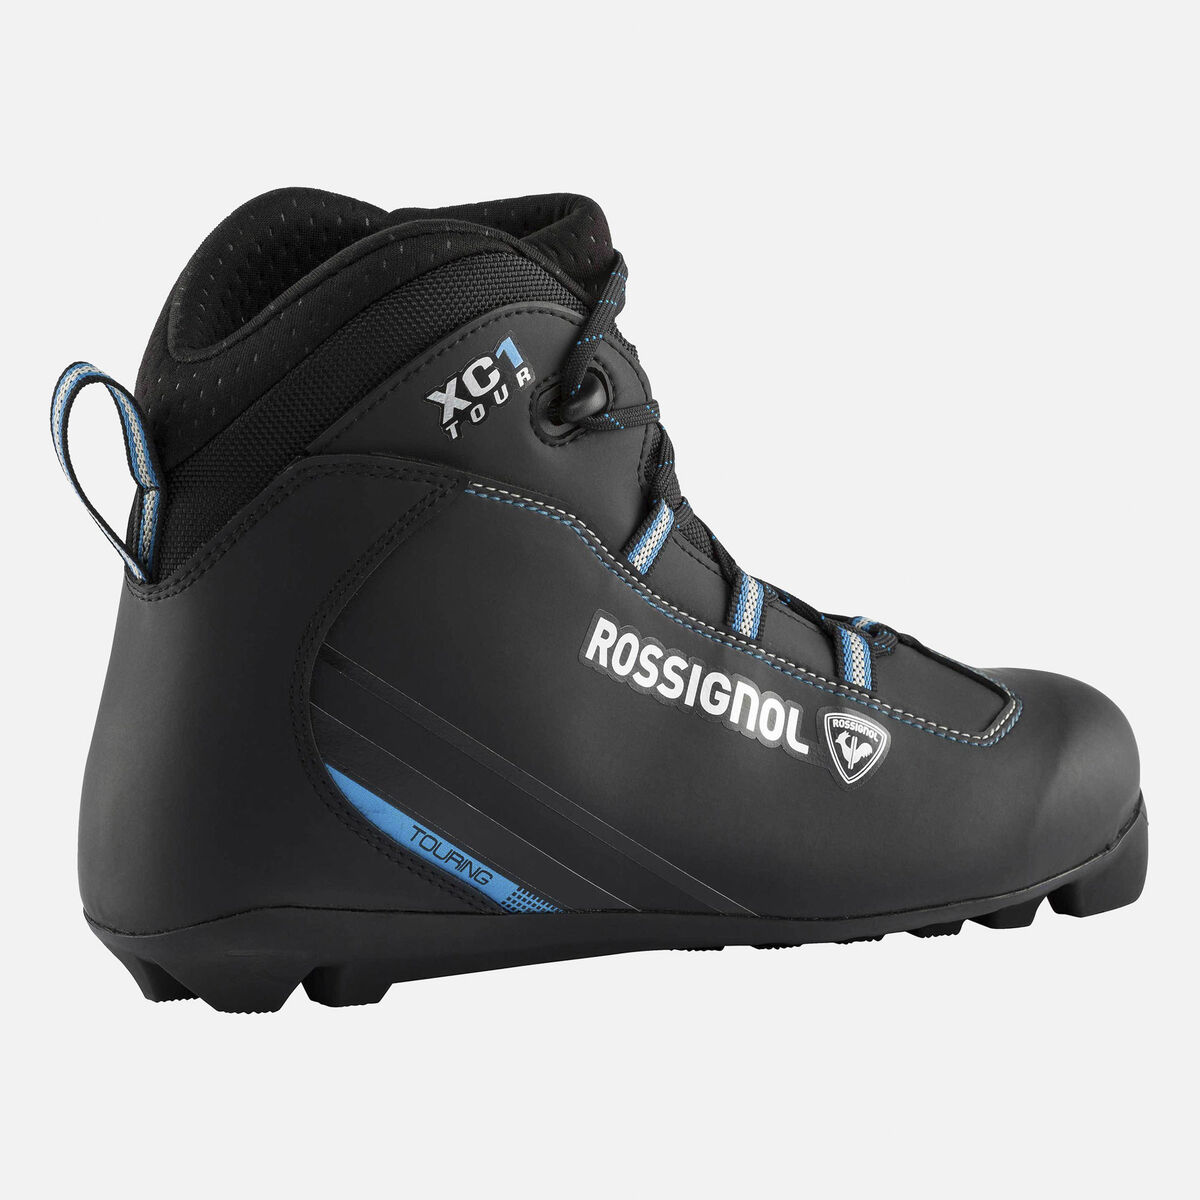 Rossignol Chaussures de ski nordique Touring Femme Boots X-1 Fw Multicolor